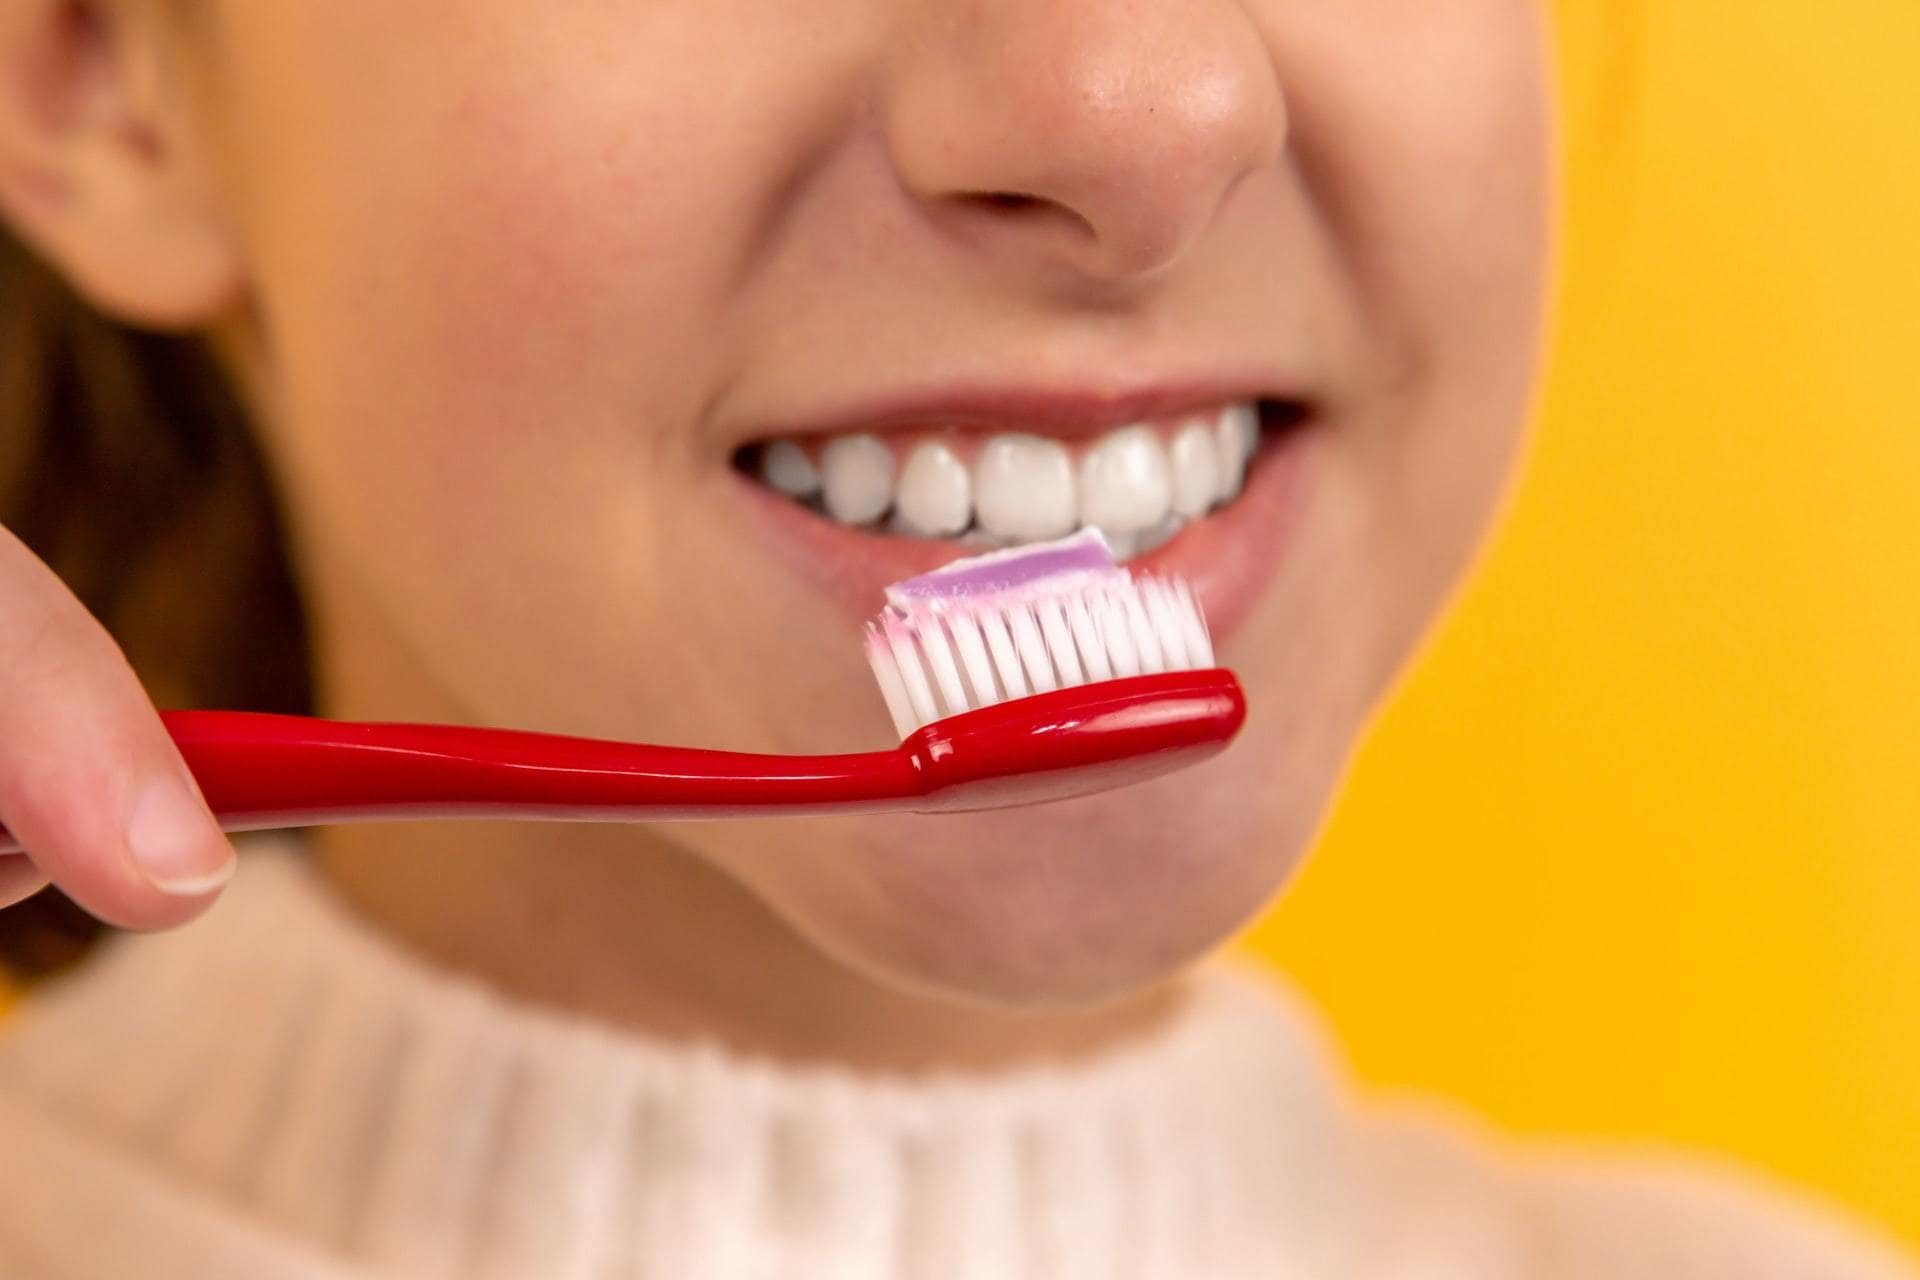 Persoon met witte tanden die tandenborstel vast houdt, op gele achtergrond